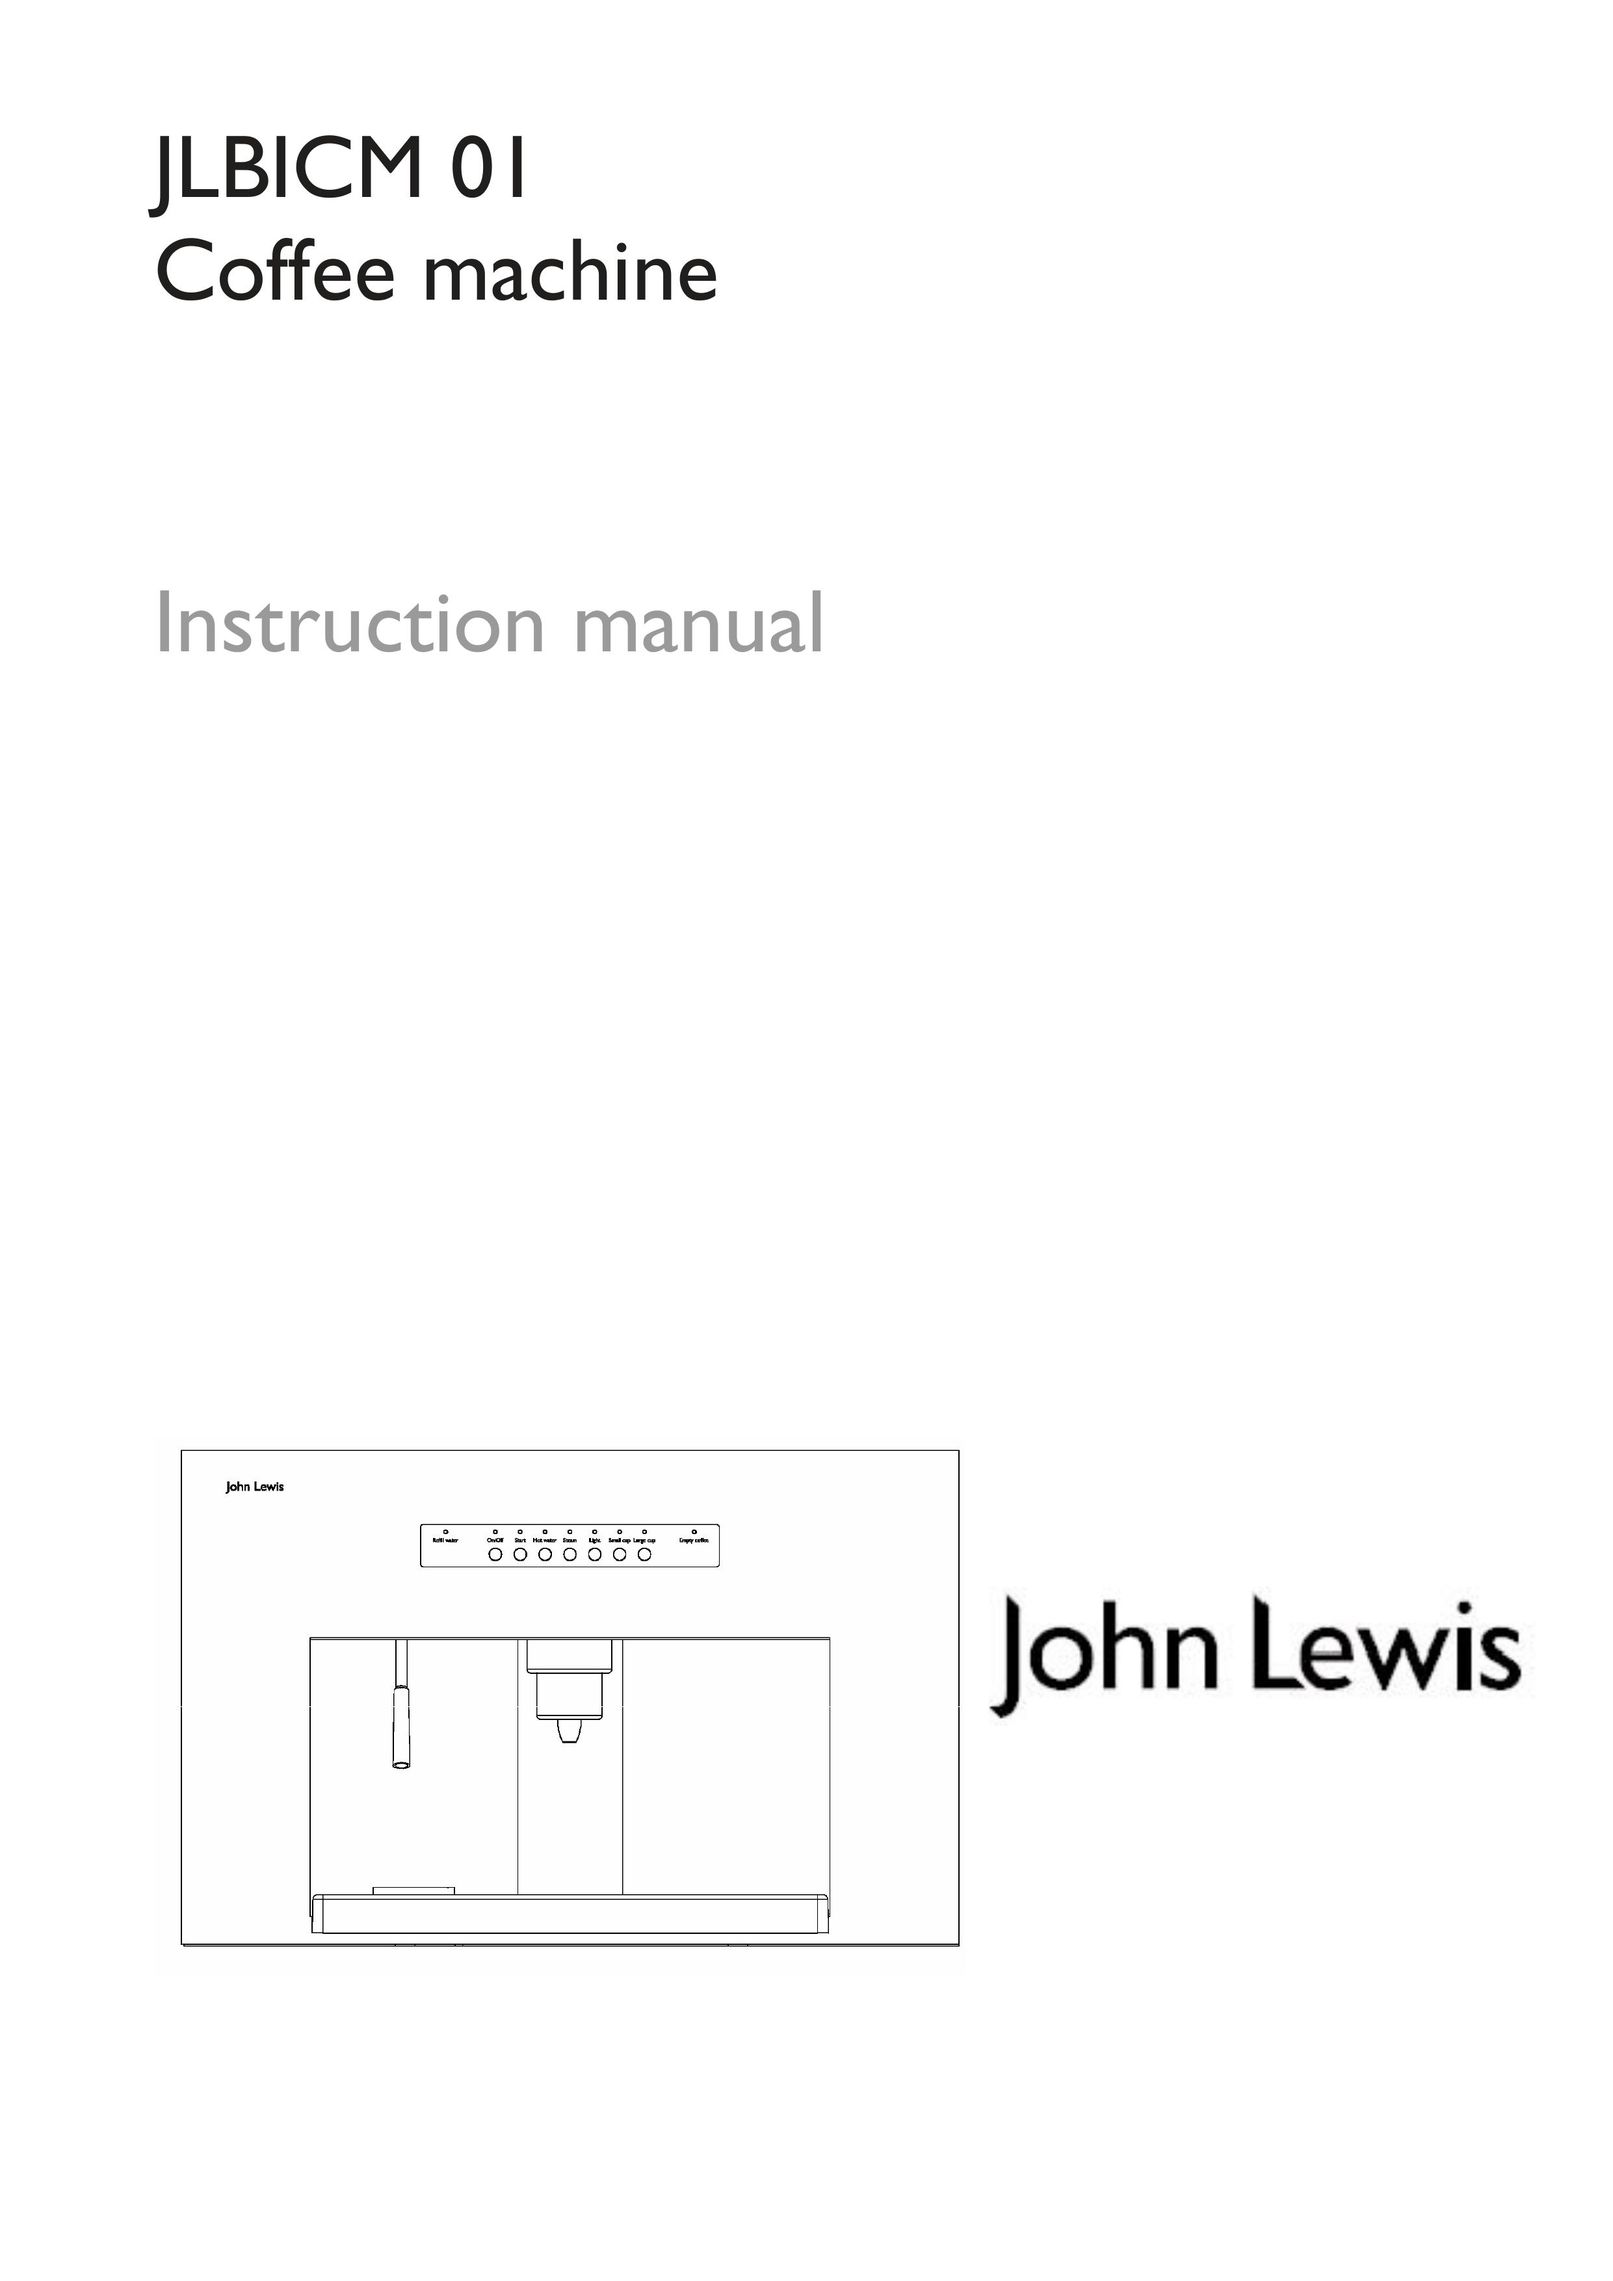 John Lewis JLBICM 01 Coffeemaker User Manual